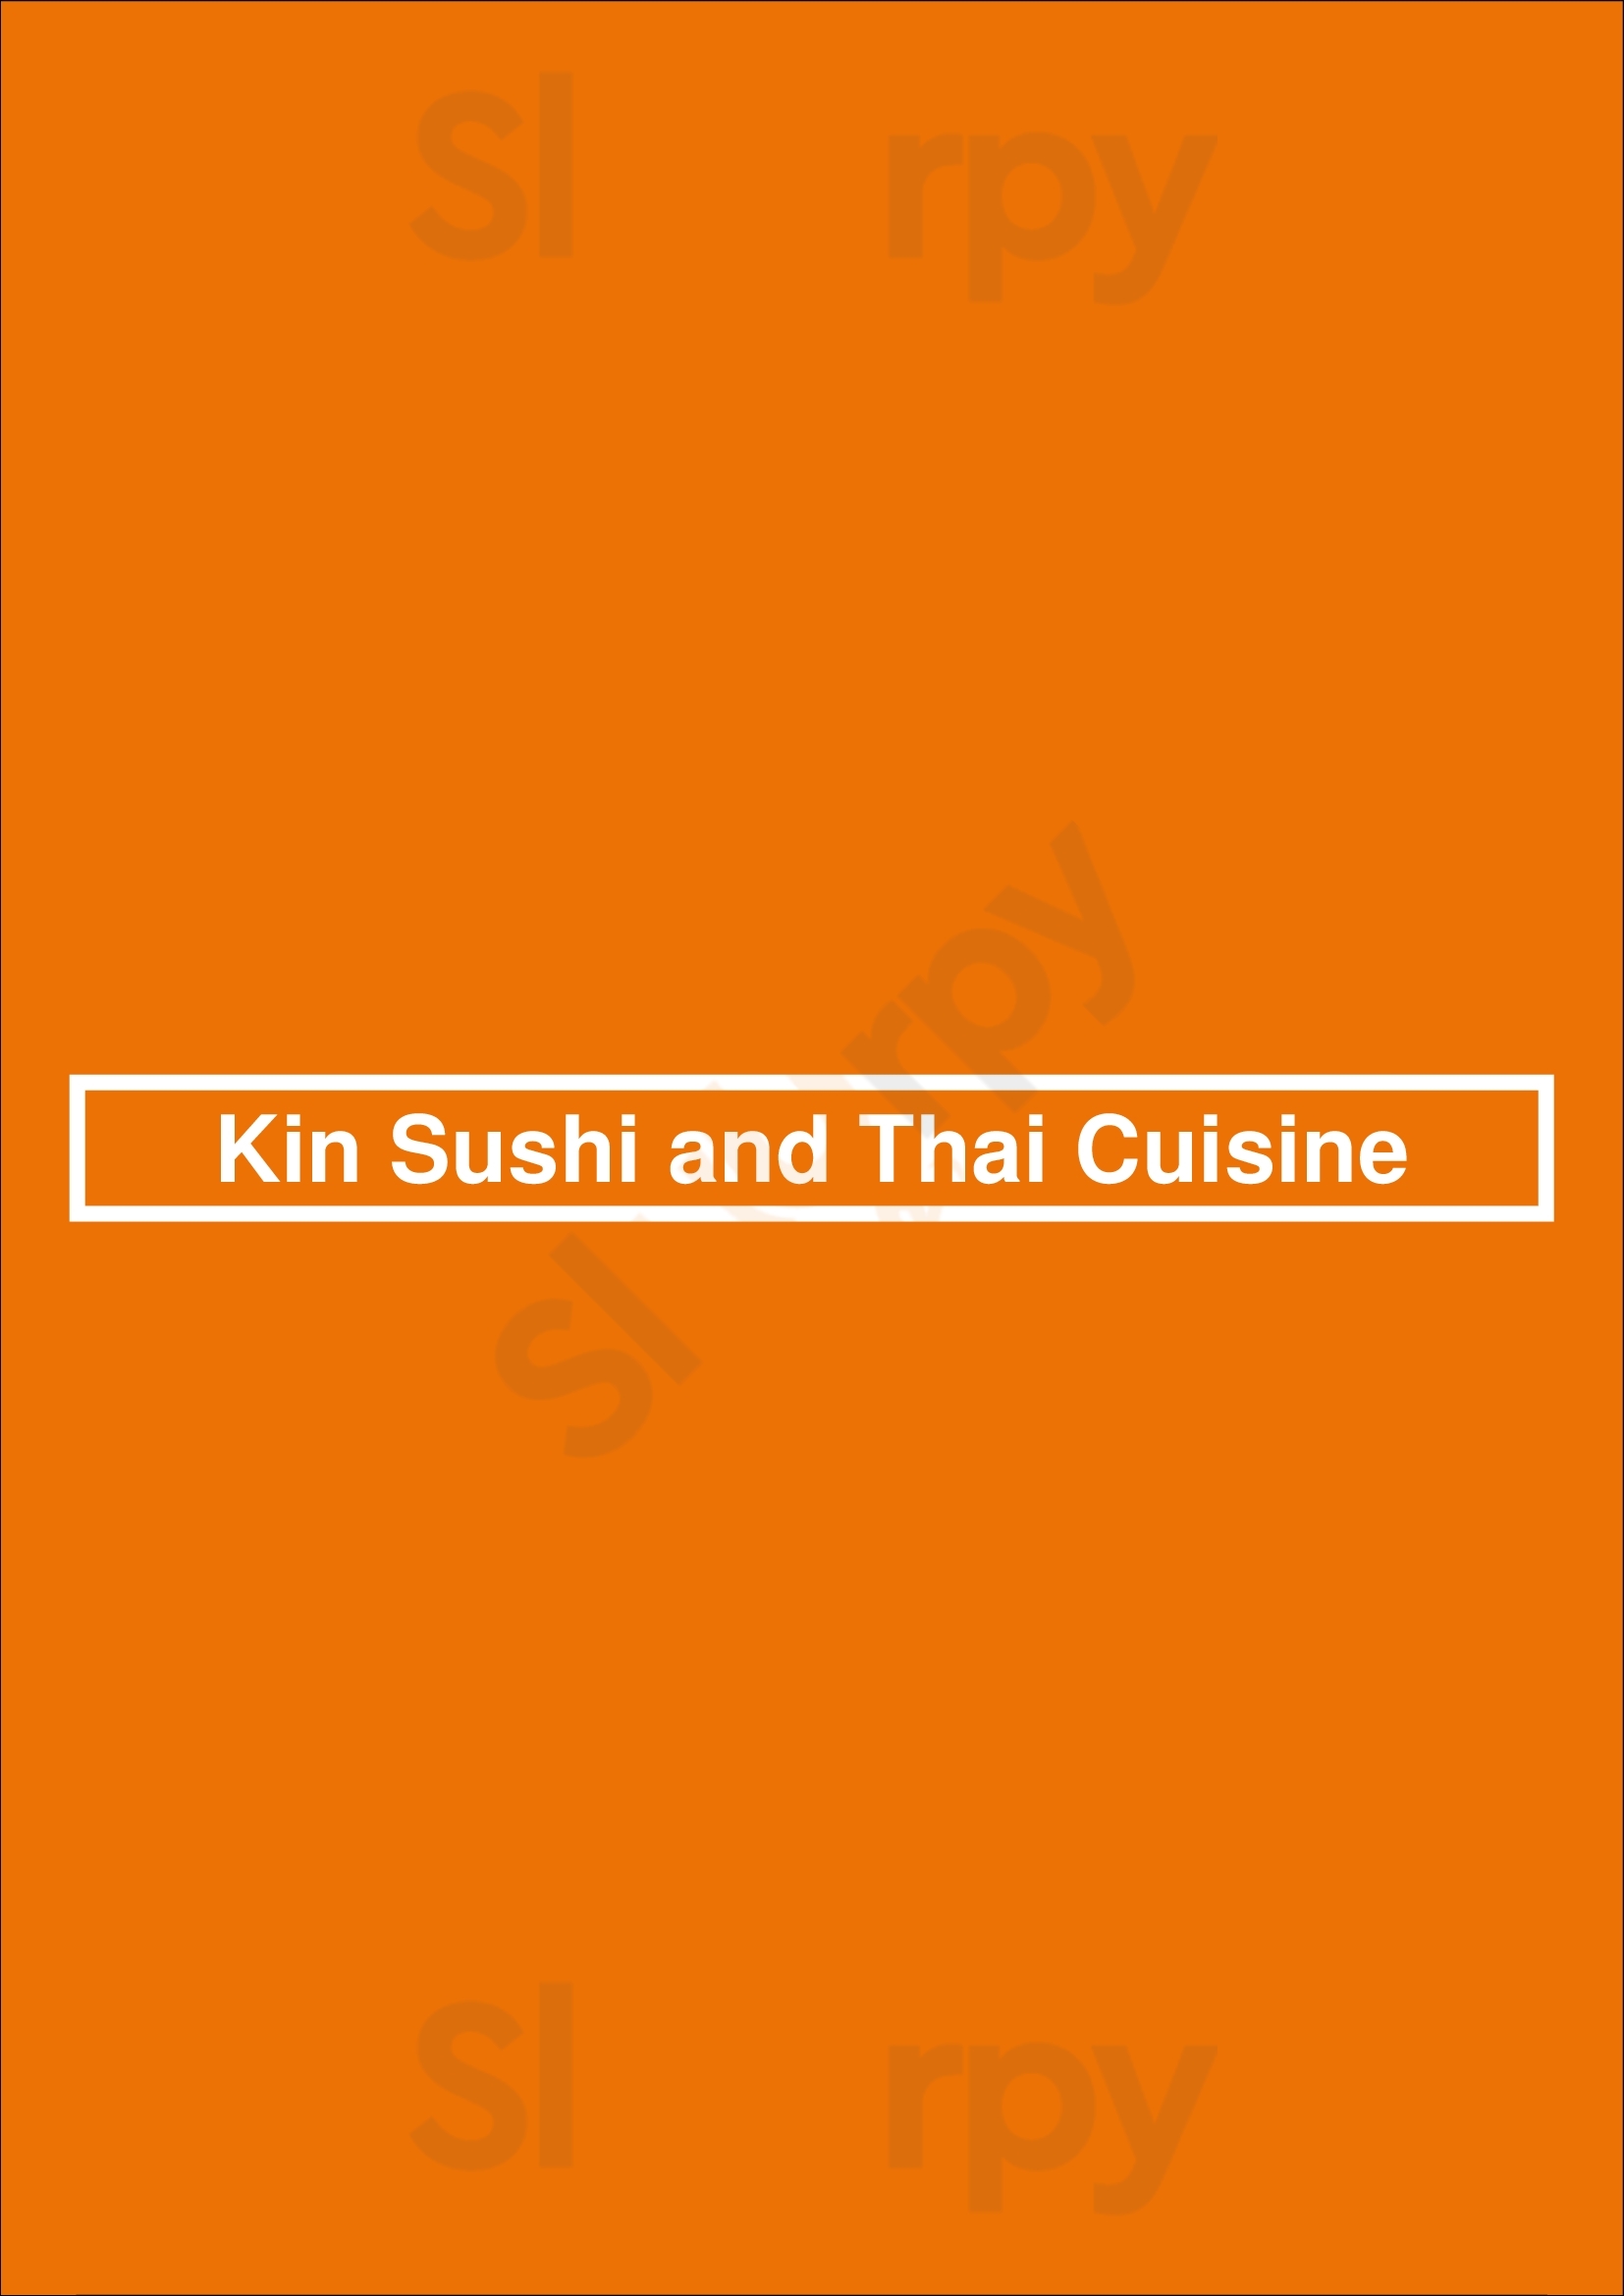 Kin Sushi And Thai Cuisine Chicago Menu - 1